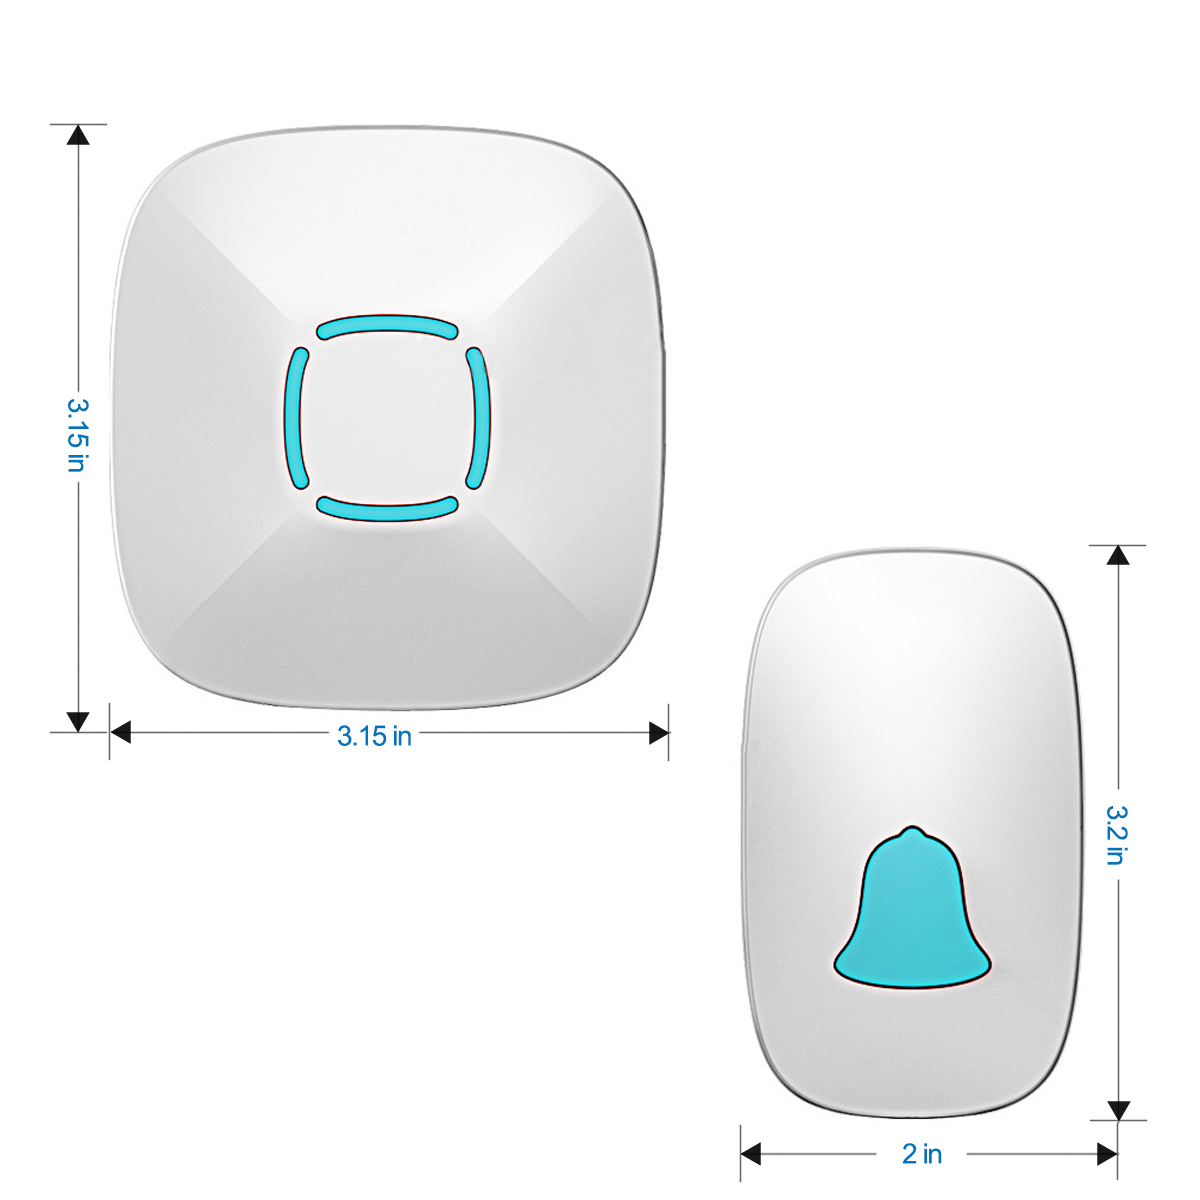 Details about   1000FT Wireless Doorbell Waterproof 2 Plugin Receiver Adjustable Volume 38 Chime